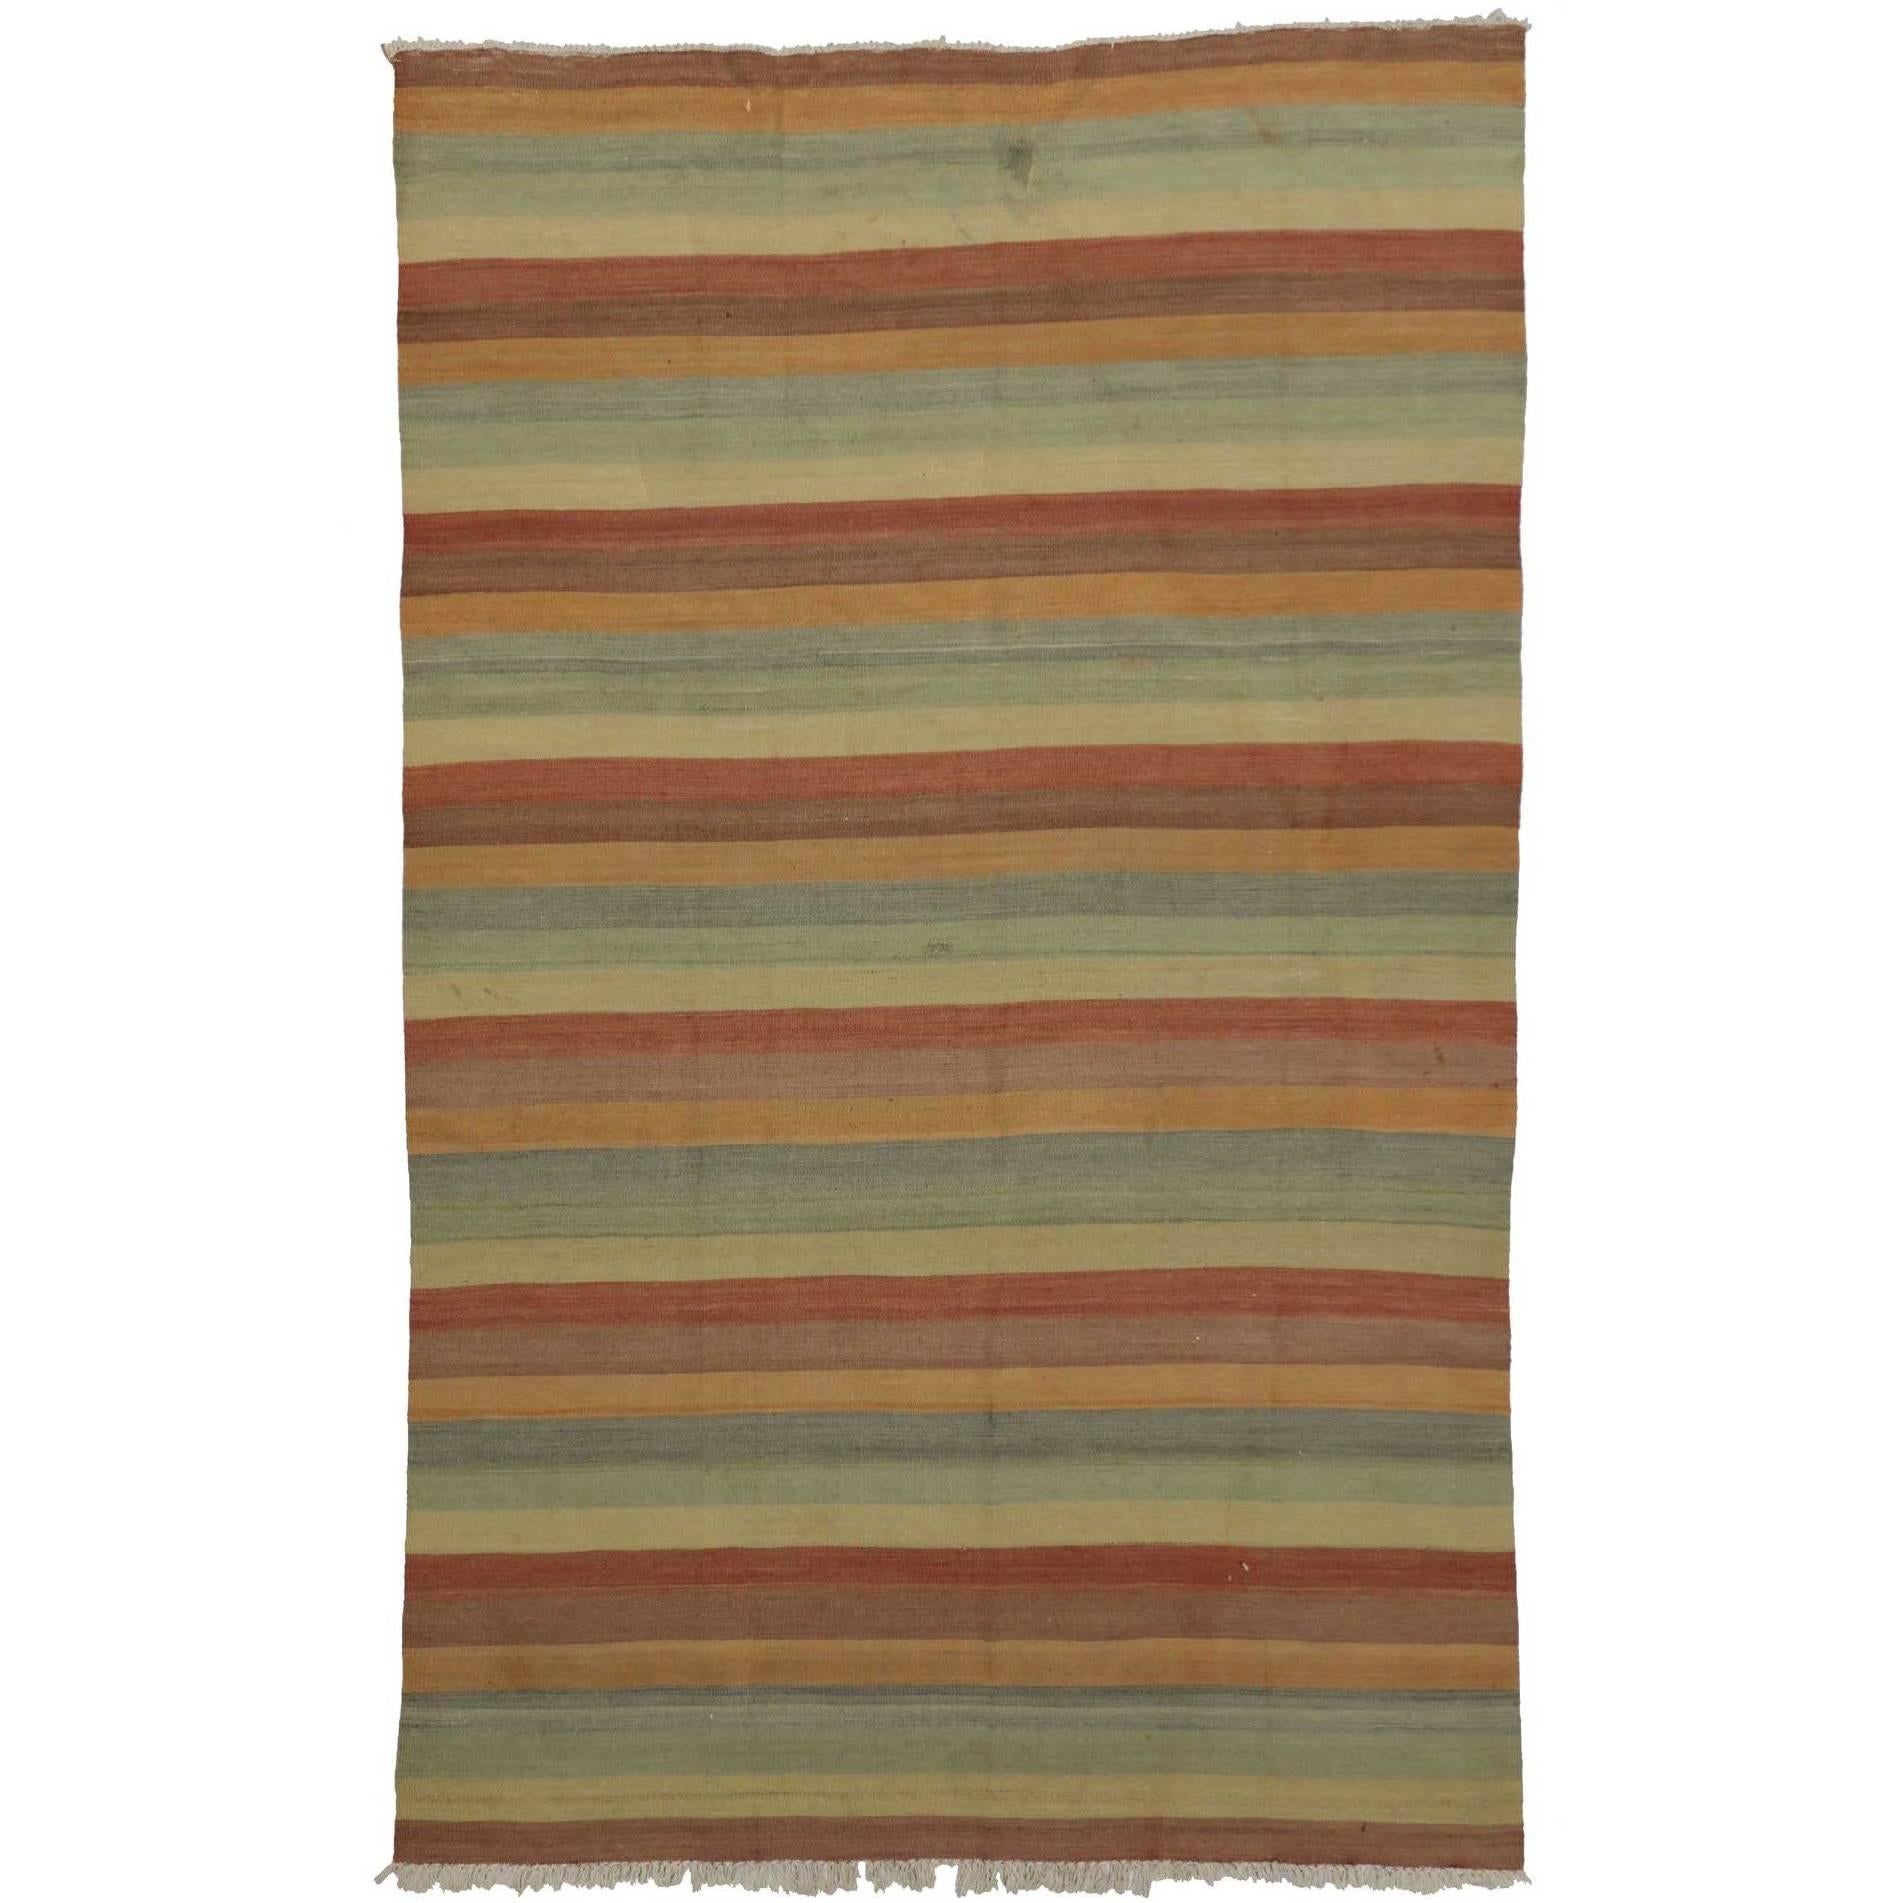 Vintage Turkish Striped Kilim Rug with Soft Colors, Flat-Weave Rug